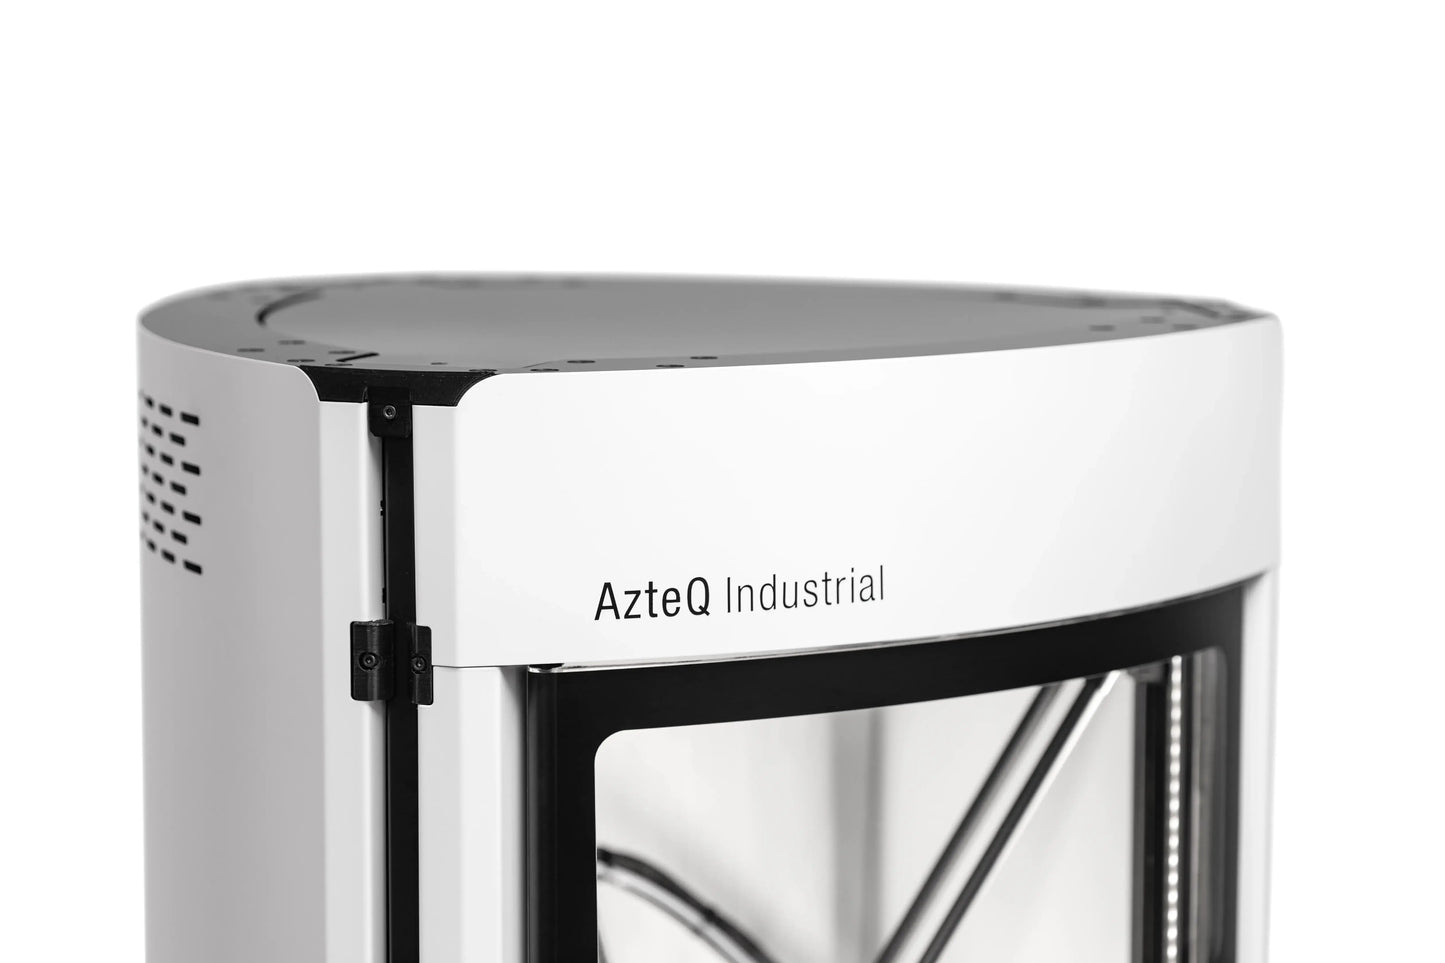 AzteQ Industrial